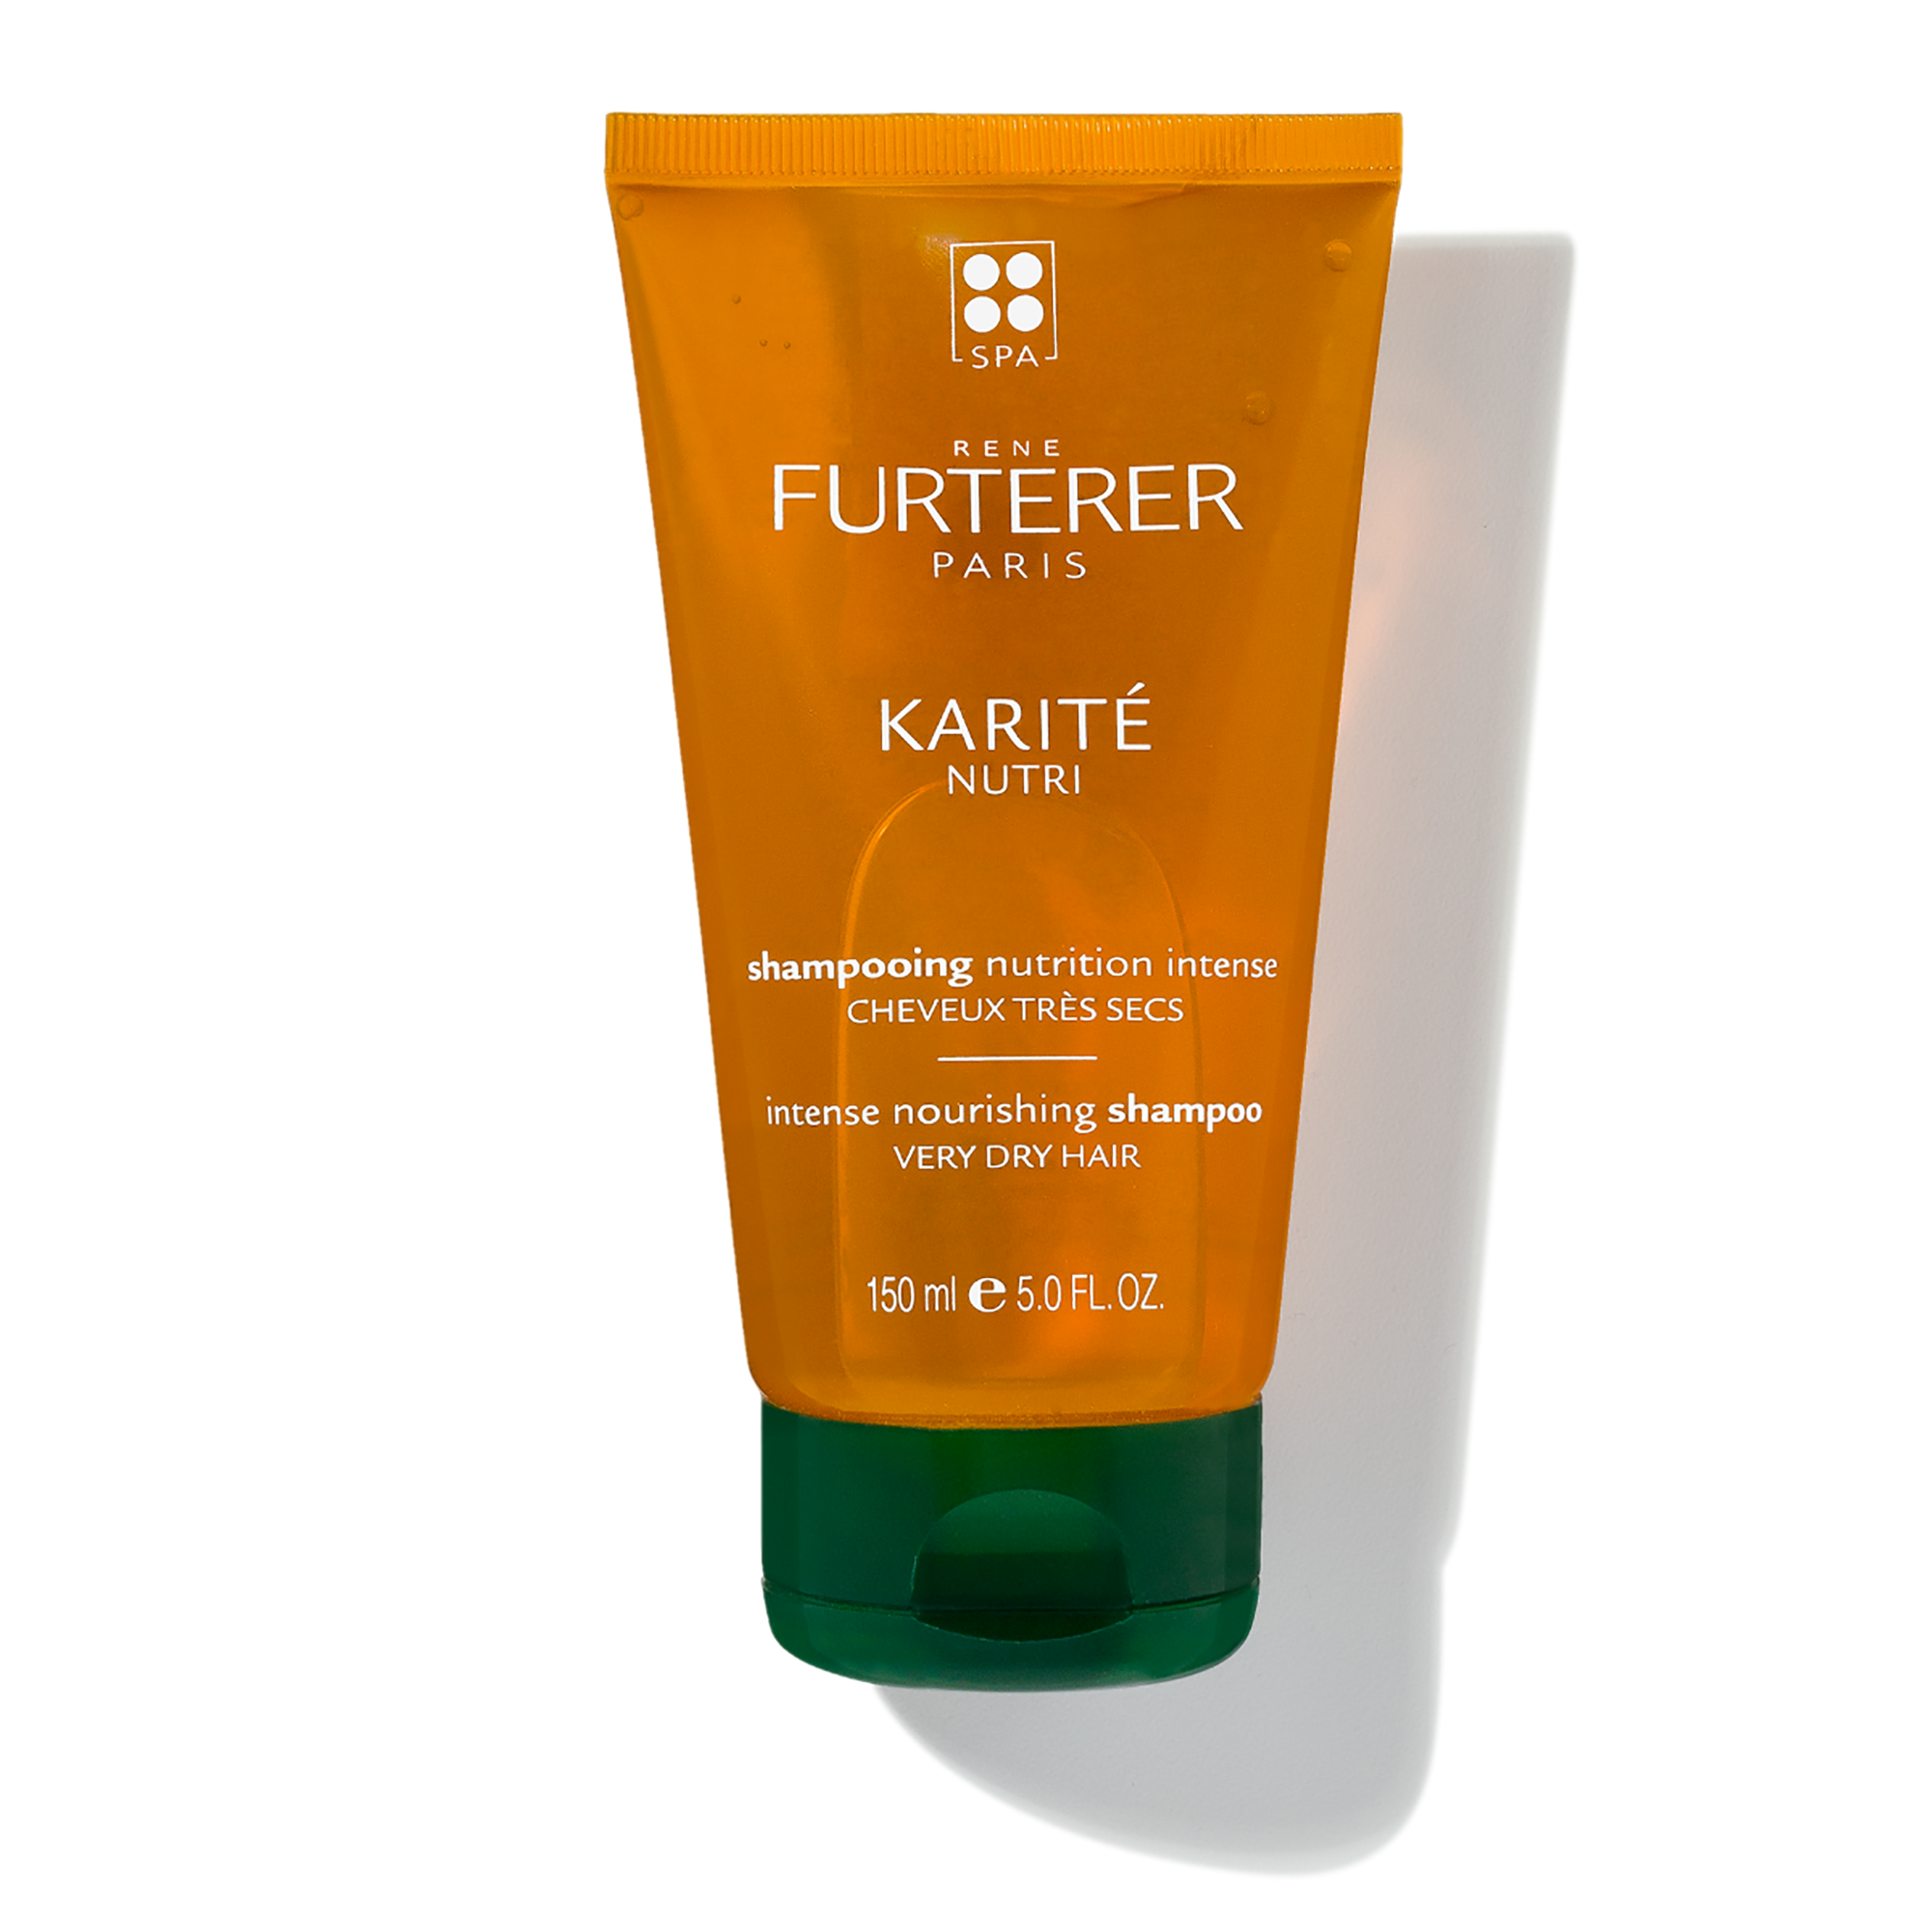 Rene Furterer KARITE NUTRI Intense Nourishing Shampoo - 5oz / 5.OZ